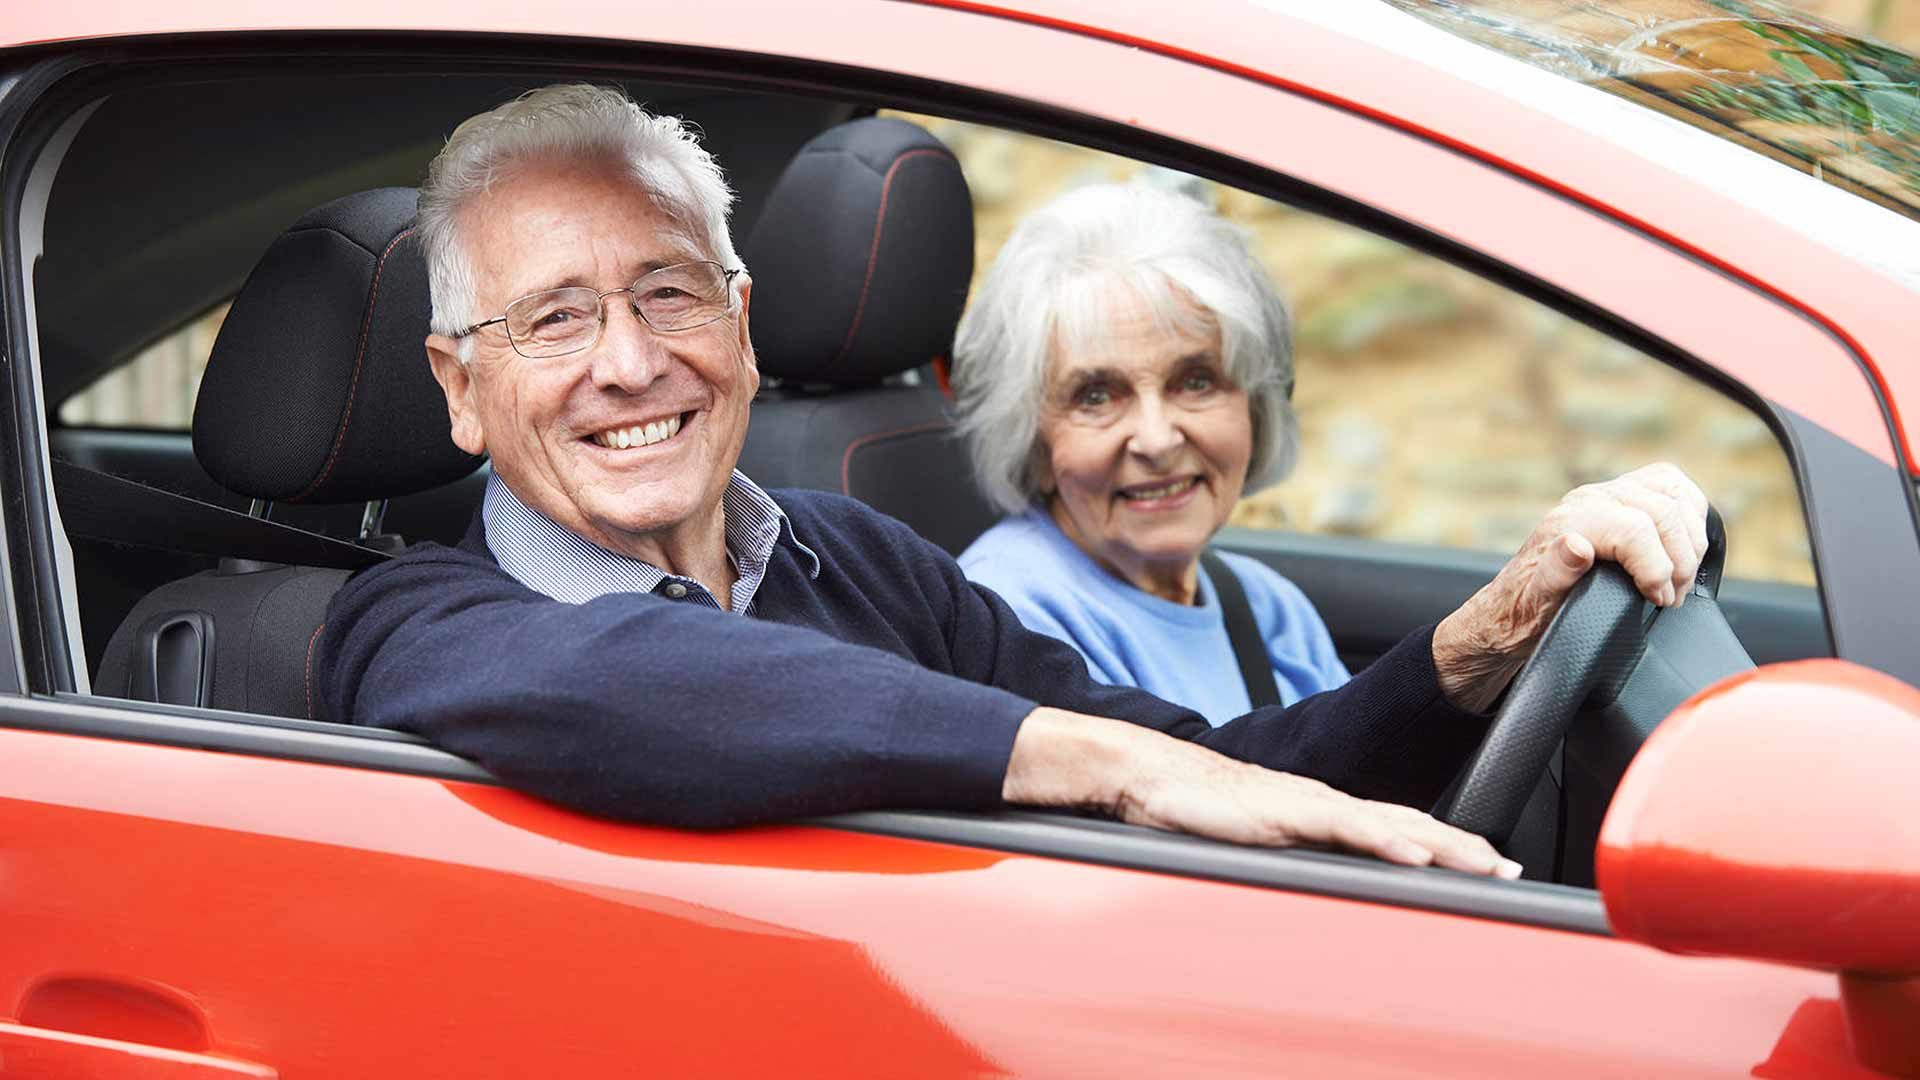 Older driver and passenger